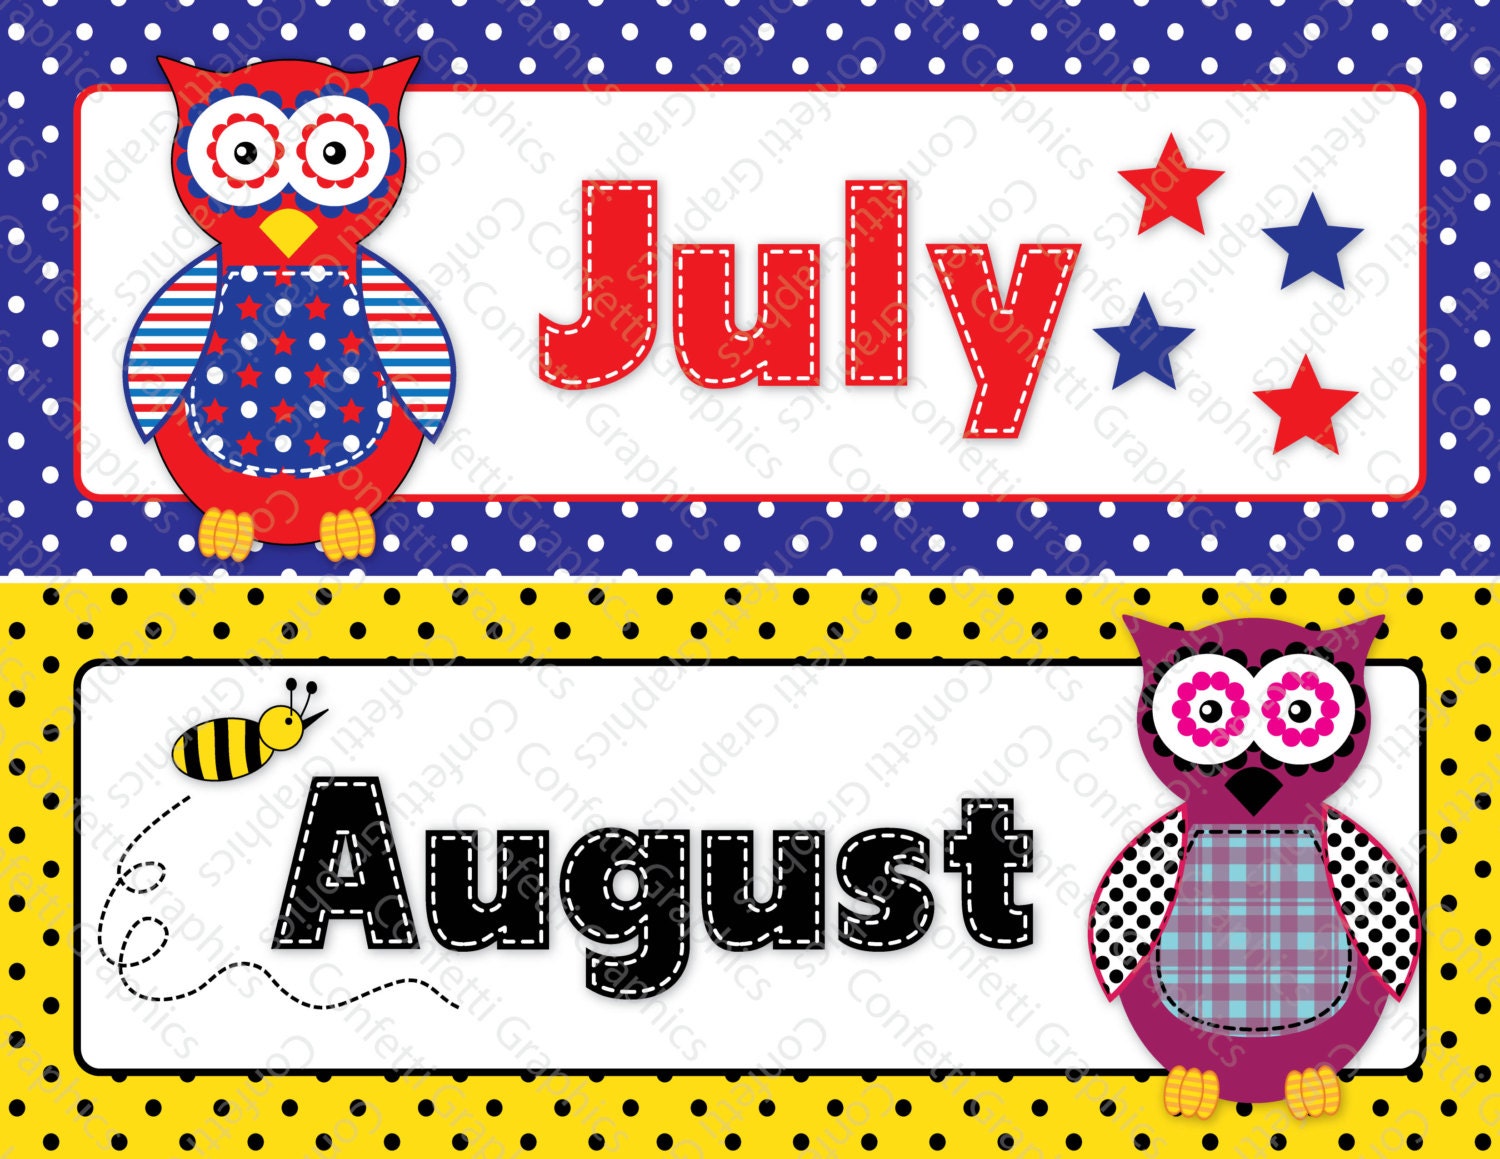 Calendar Months Cards Owl Polka Dot Hobo by ConfettiGraphics